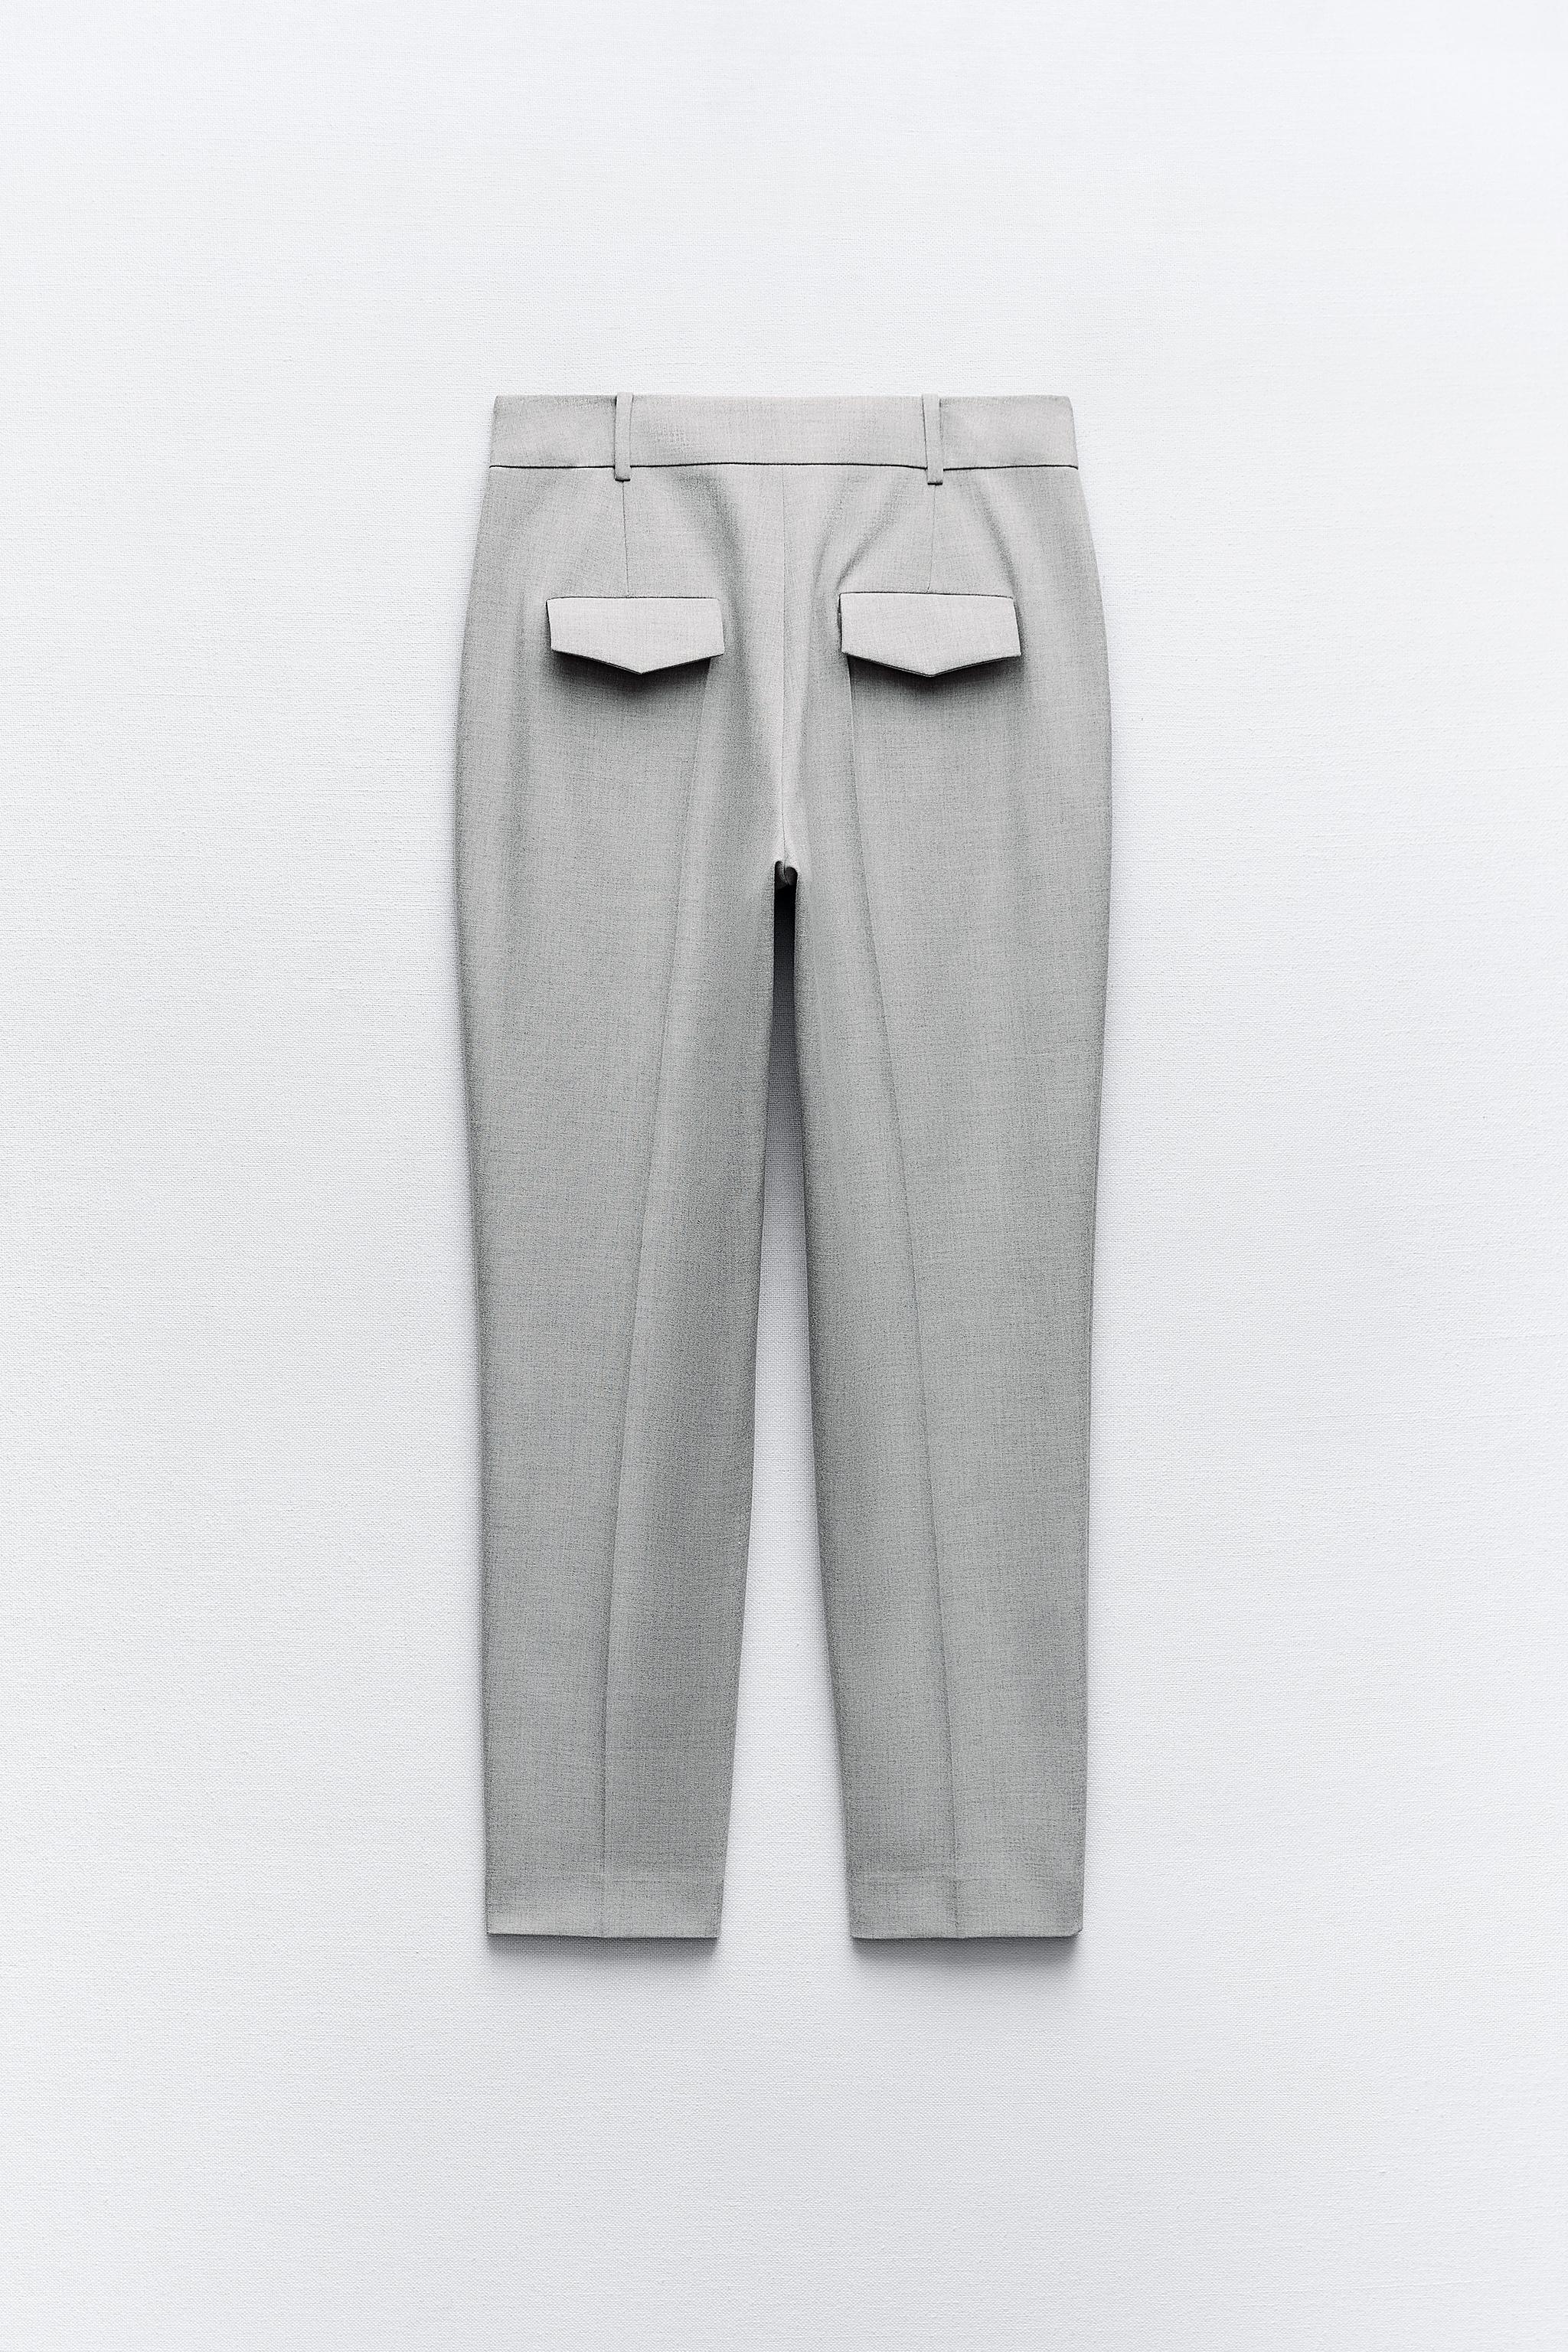 SLIM FIT PANTS - Light gray